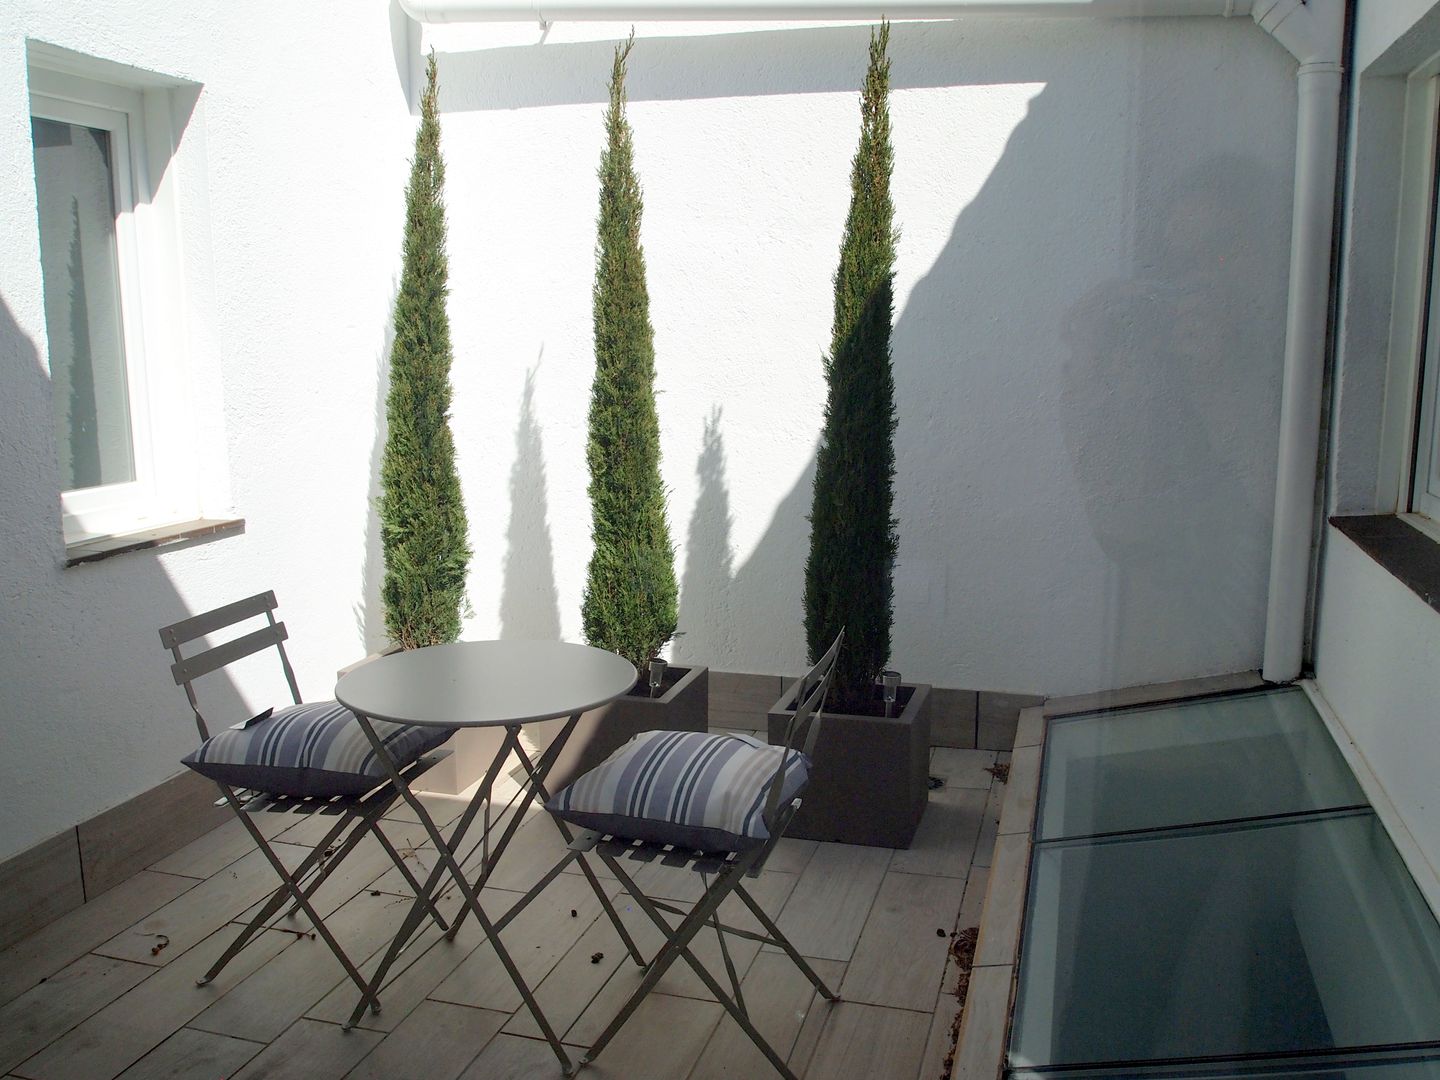 Reforma integral de vivienda unifamiliar en Madrid, Reformmia Reformmia Modern Garden